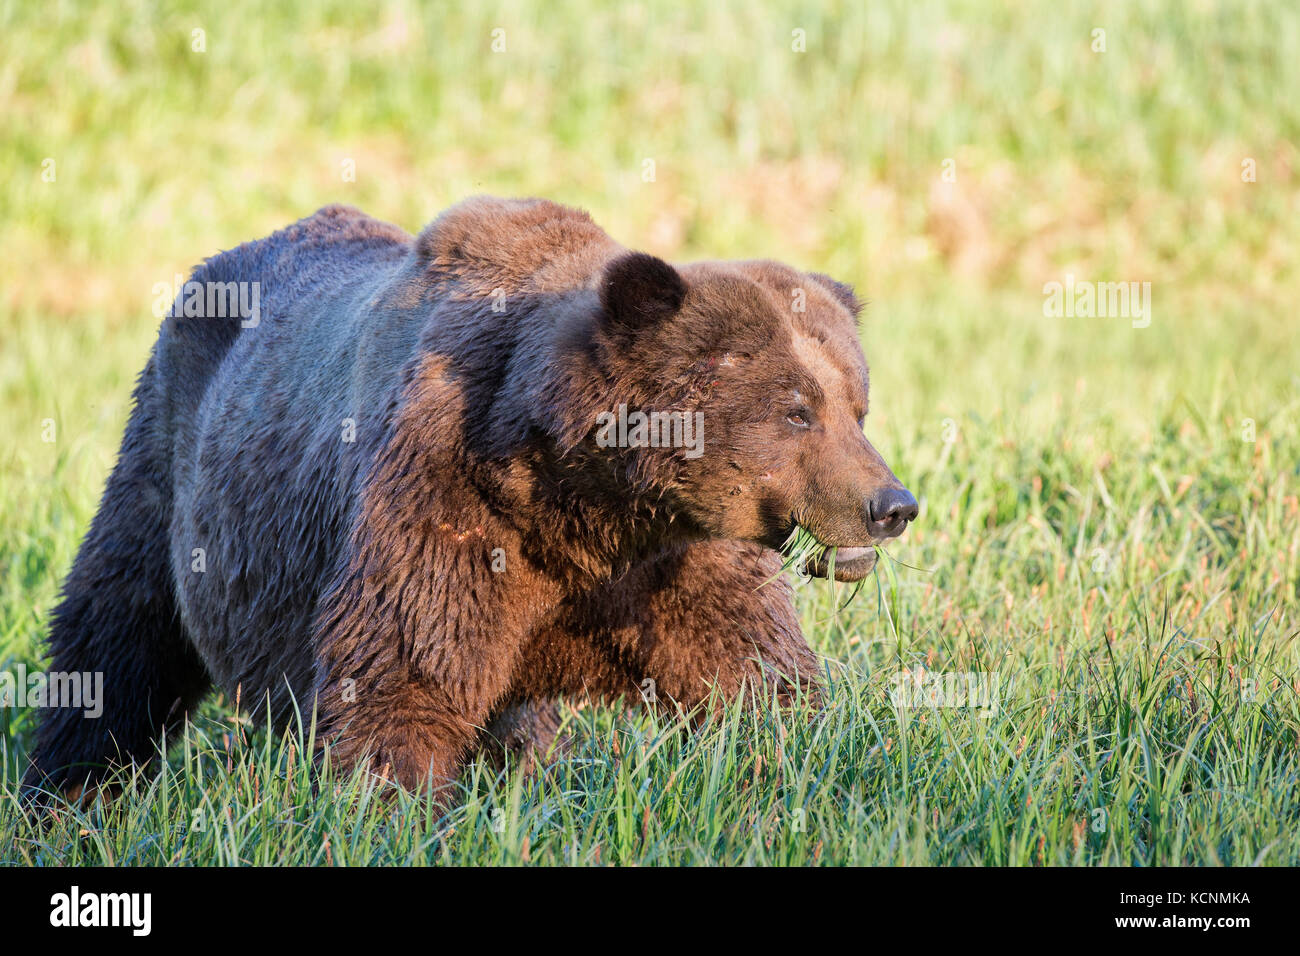 Grizzly Bear (Ursus arctos), große horriblis geschrammt Männlich, Essen von lyngbye Segge (carex lyngbye), kwinimass Estuary, British Columbia, Kanada. Stockfoto